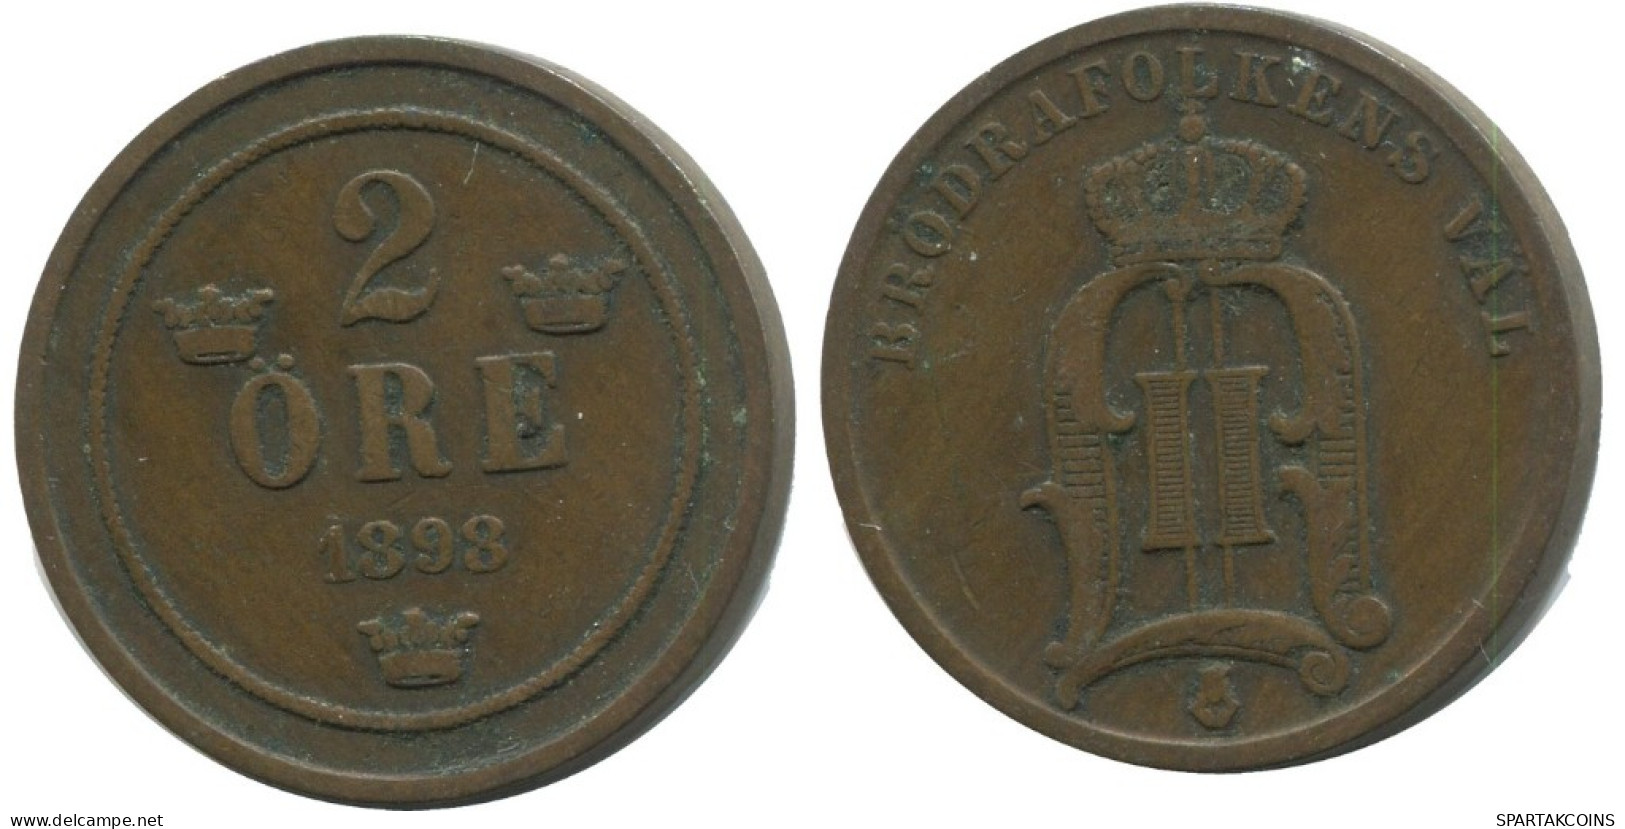 2 ORE 1898 SWEDEN Coin #AC948.2.U.A - Sweden